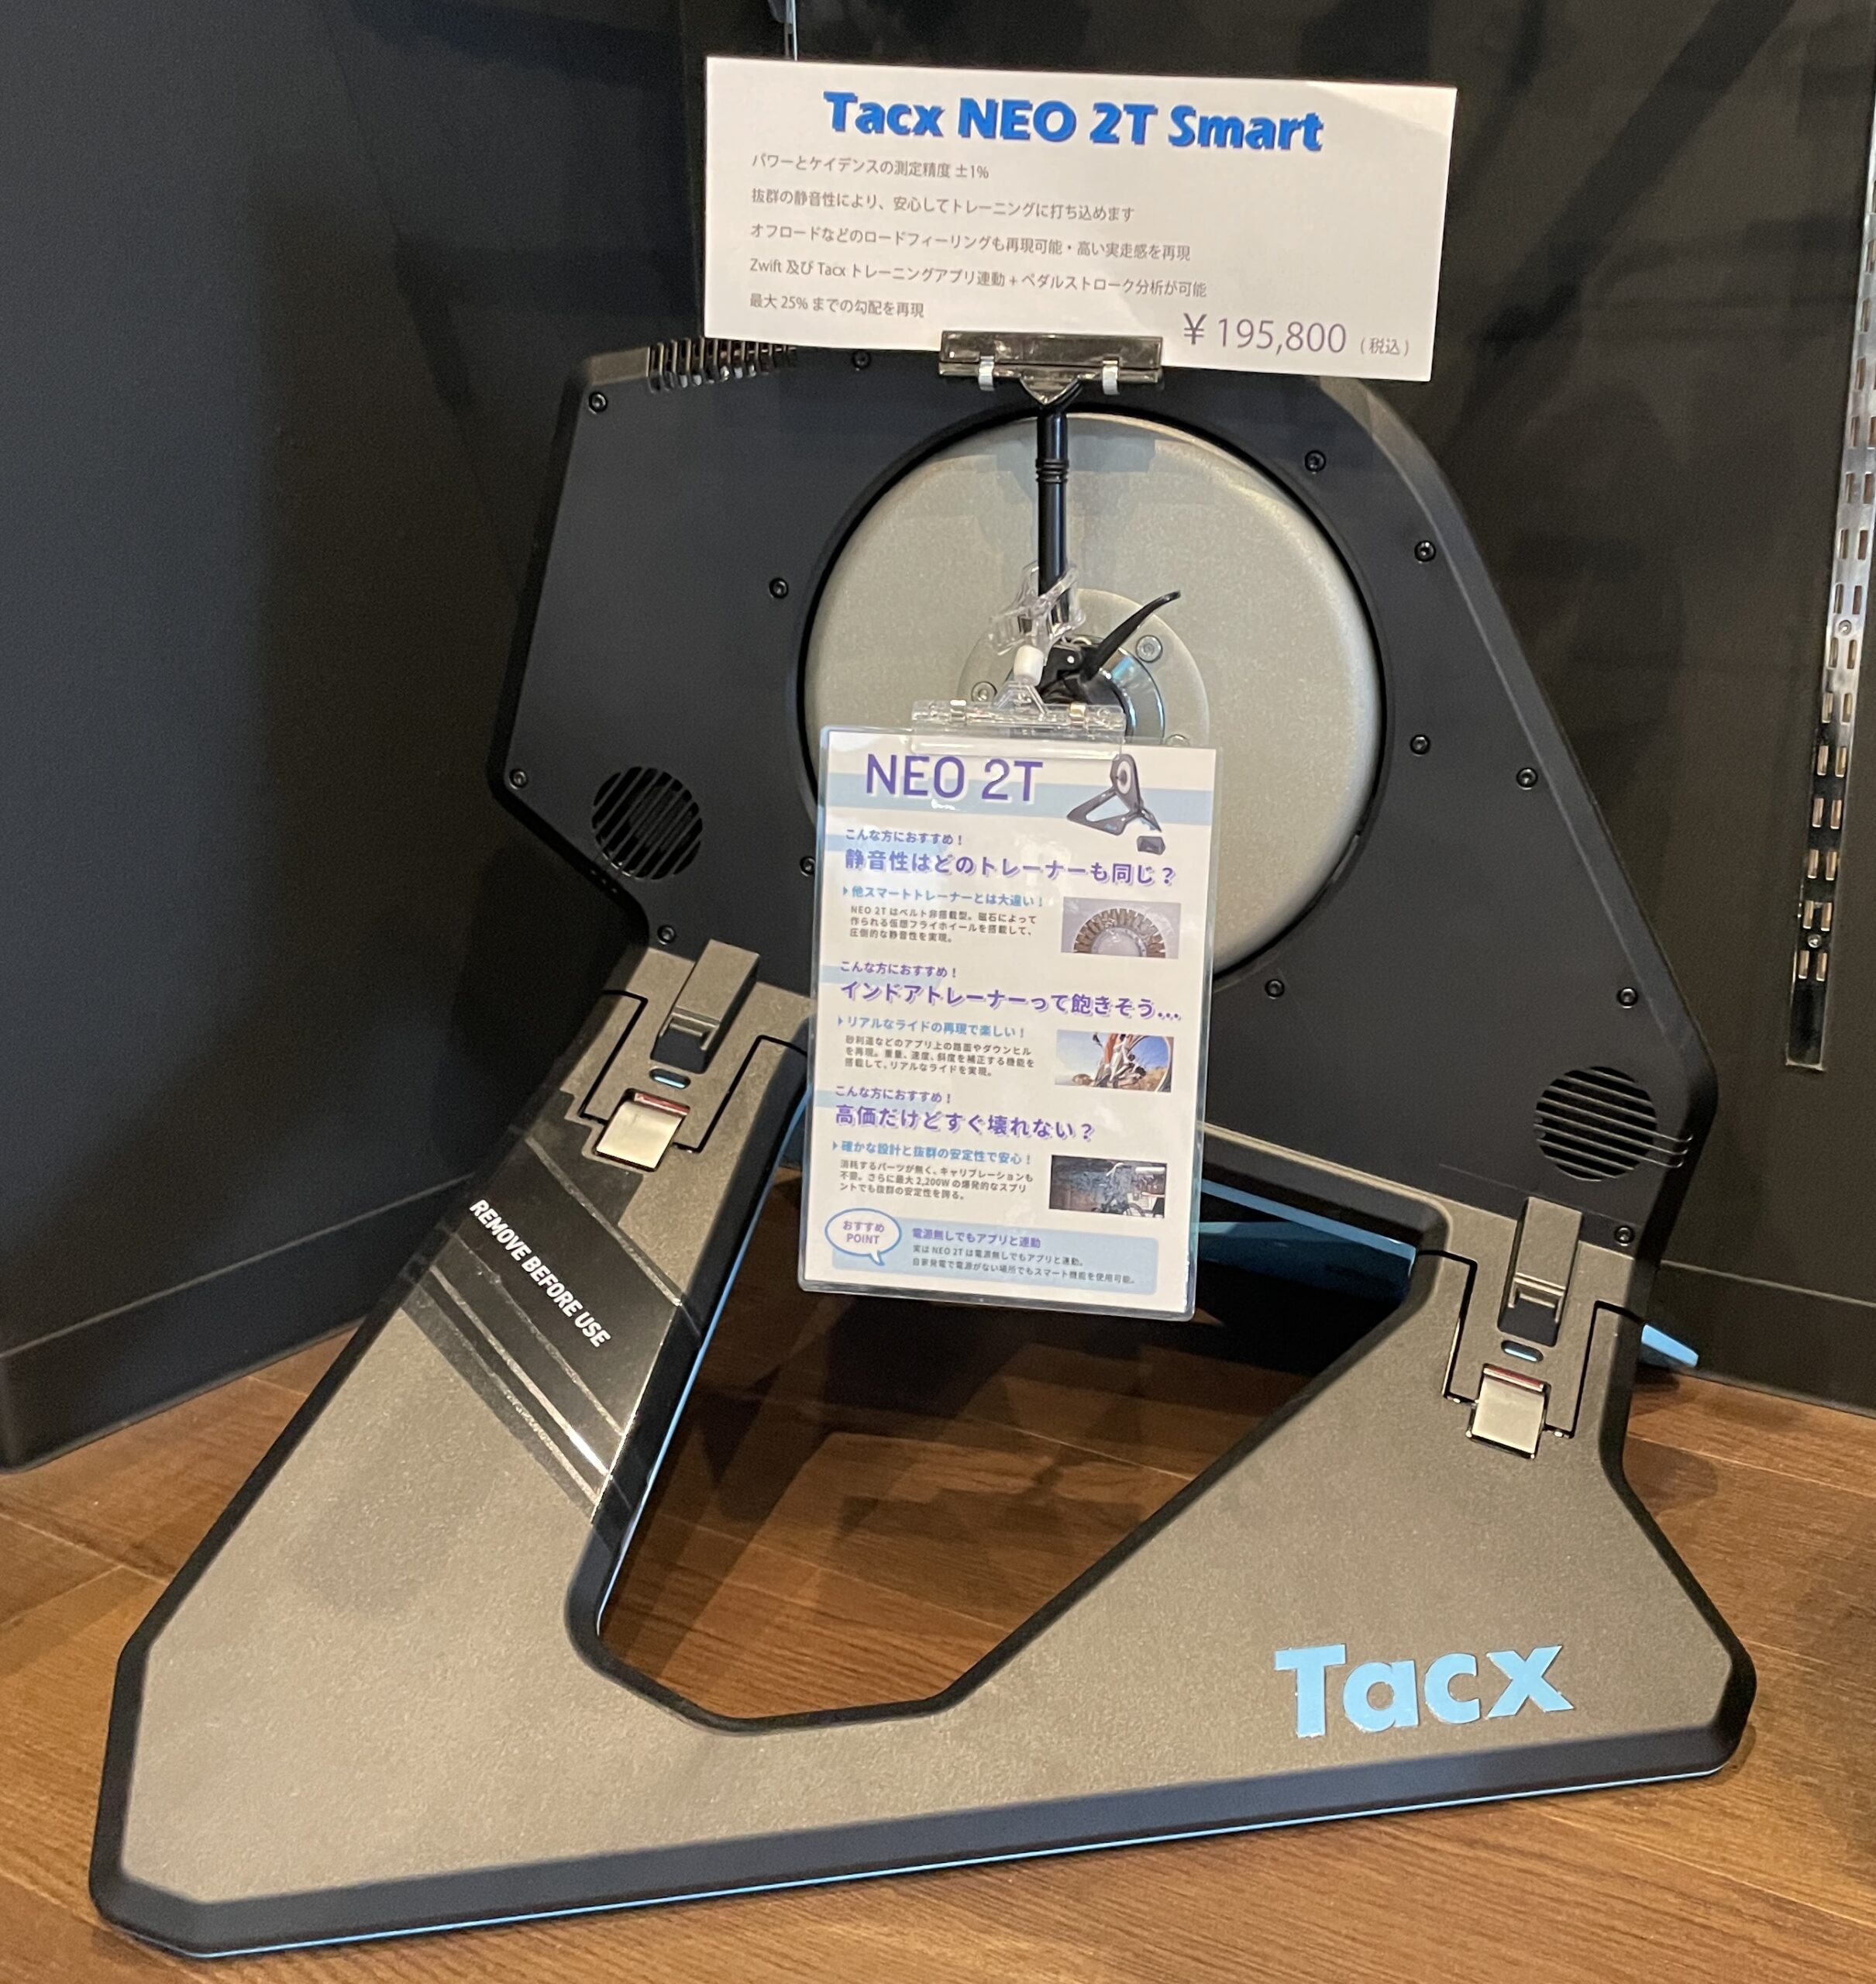 TACX NEO 2T Smart展示画像